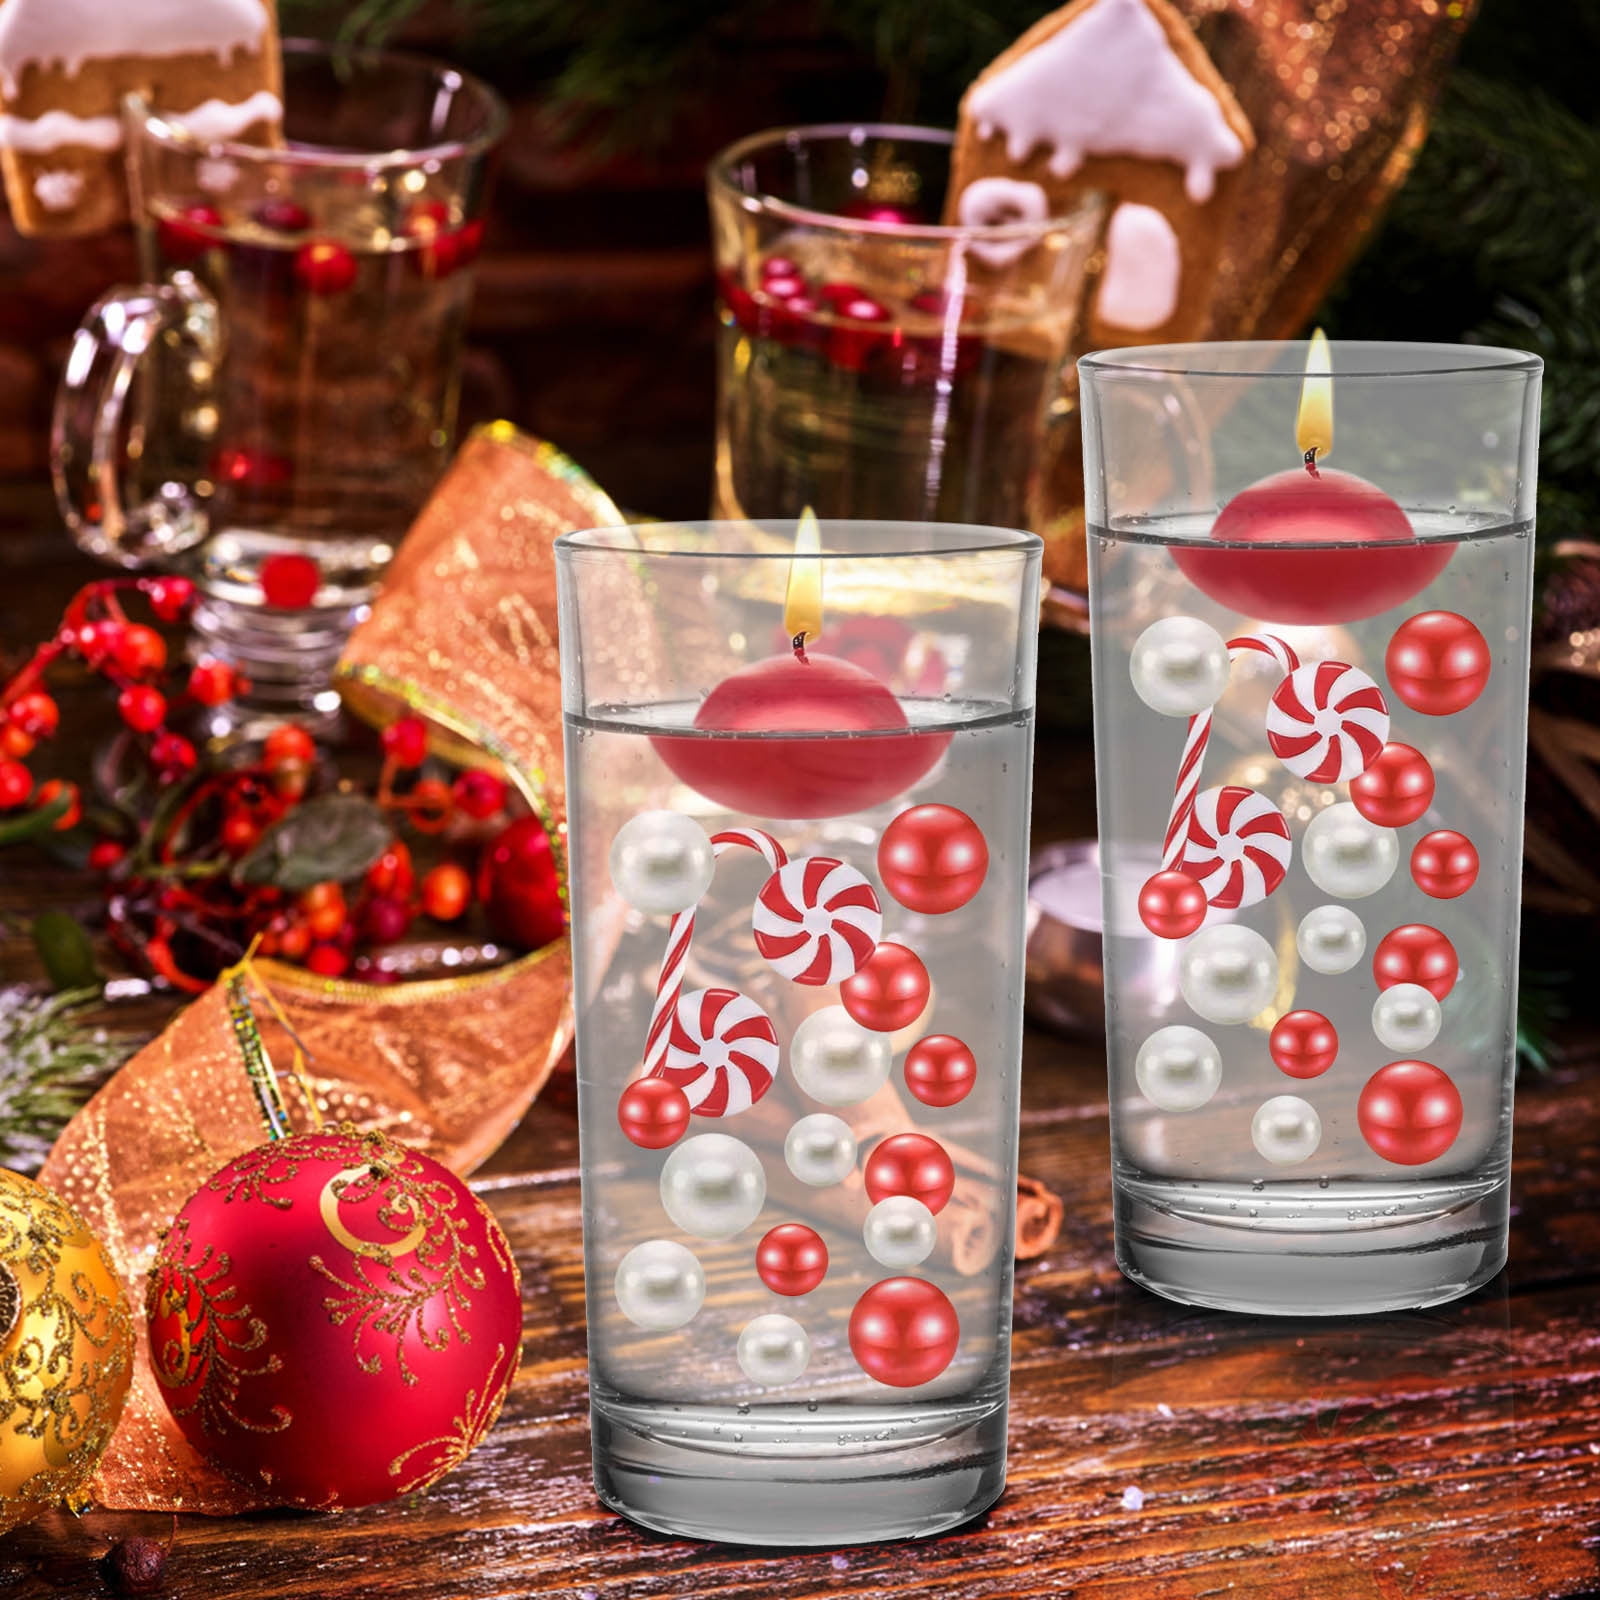 SelfTek 6129 Pcs Christmas Vase Filler, White and Red Candy Cane Vase  Filler Beads,Floating Pearls Water Gel Beads for Vase Filler Table  Centerpieces